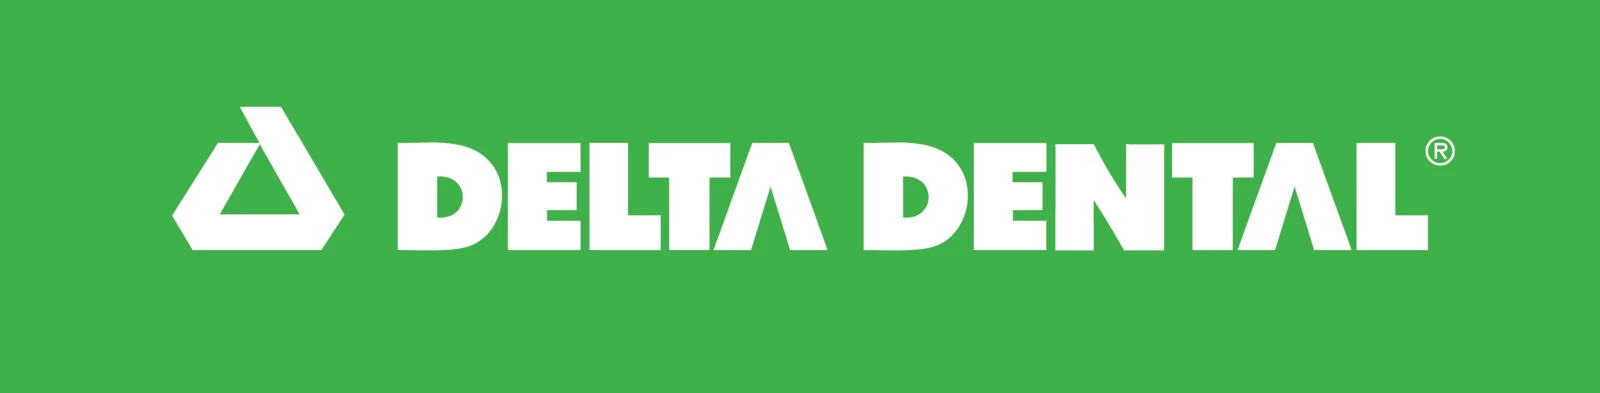 Delta Dental Green Logo 361C (RGB)